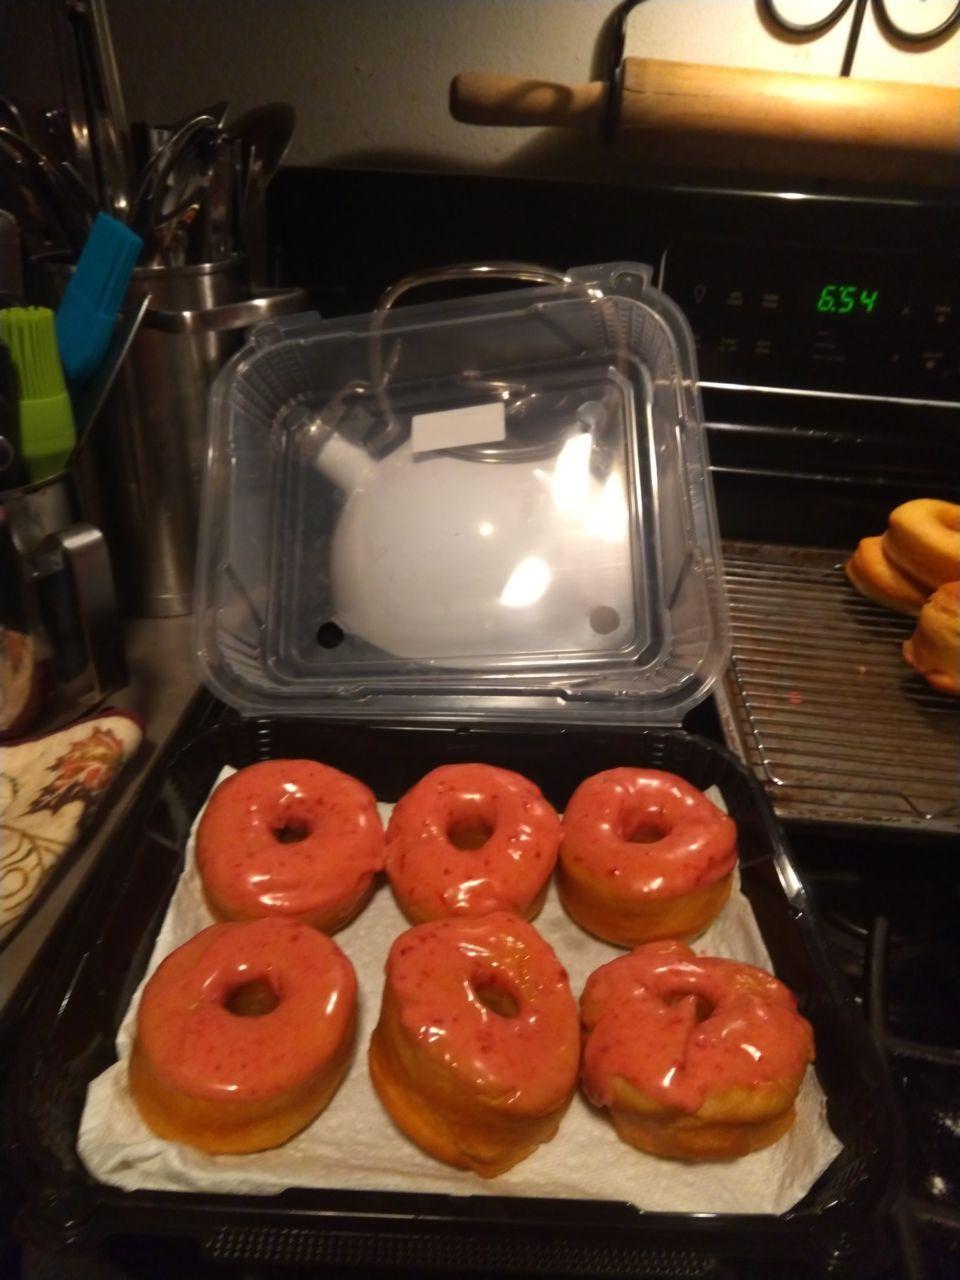 A box of strawberry glazed donuts.